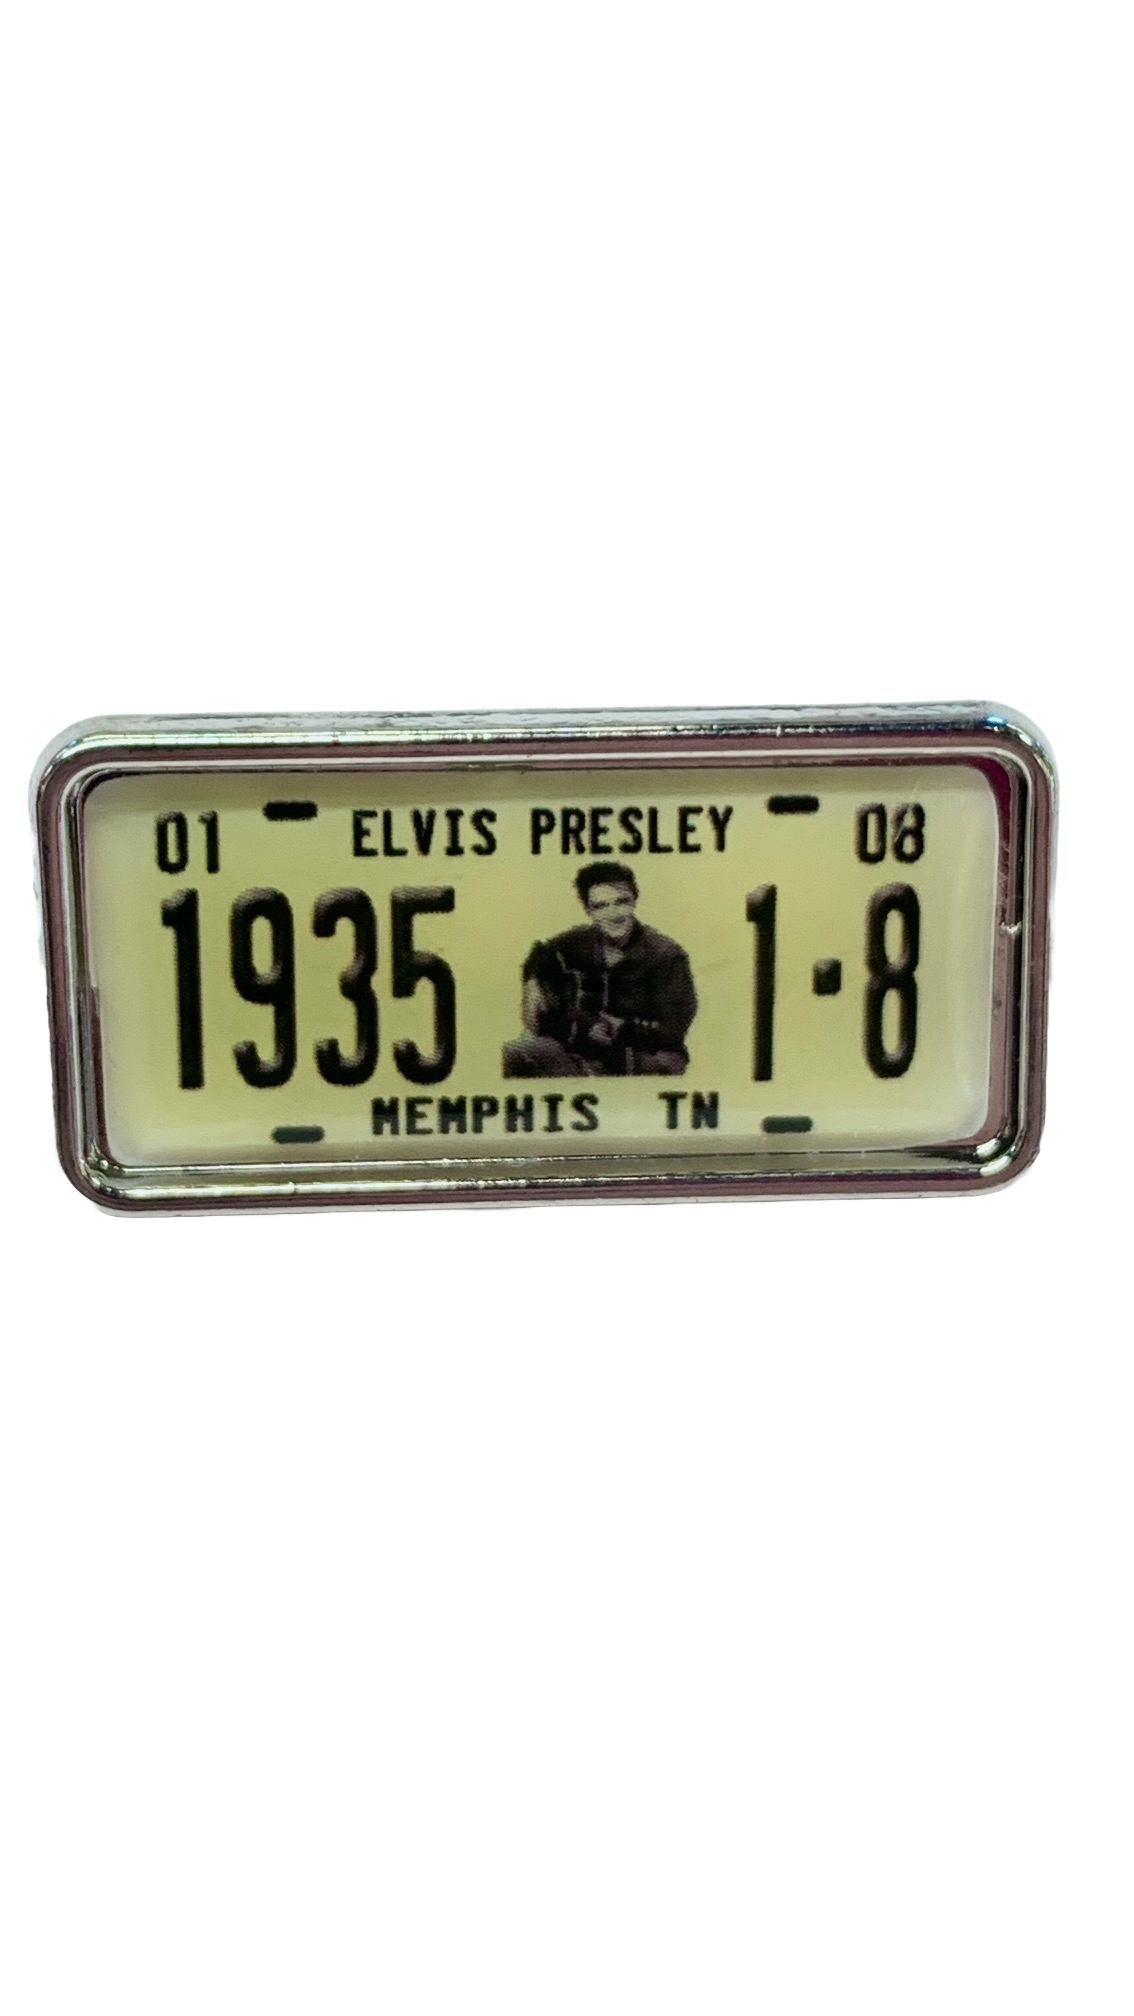 LAPEL PIN ELVIS LICENSE PLATE 1935-1-8  MEMPHIS TN.